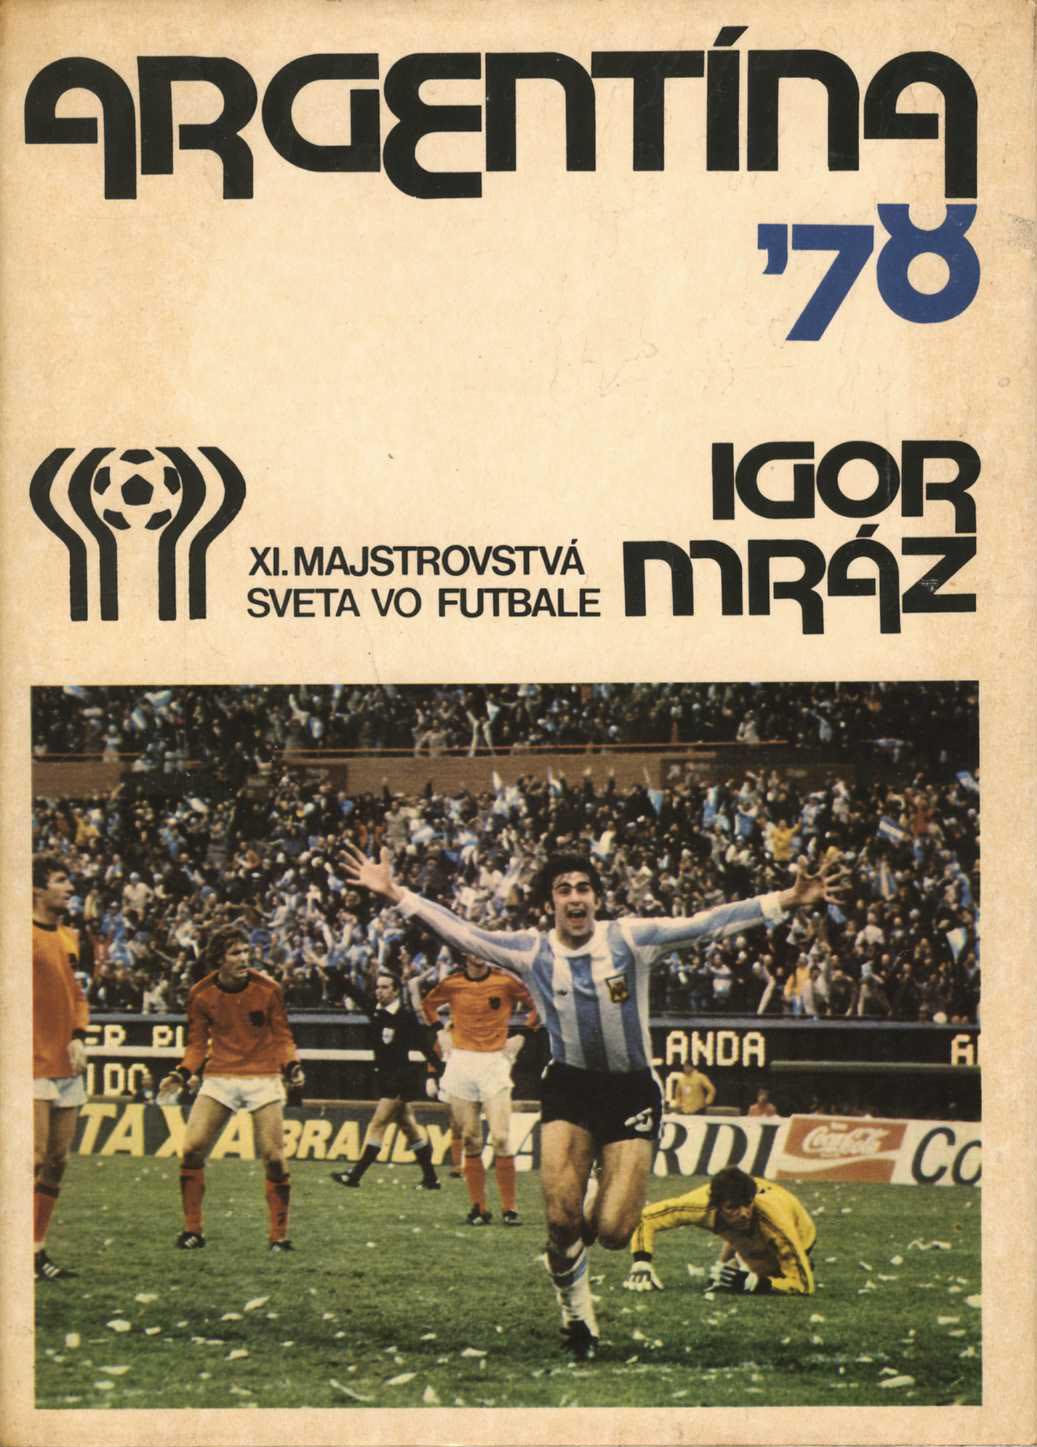 Argentína 78 (Igor Mráz)